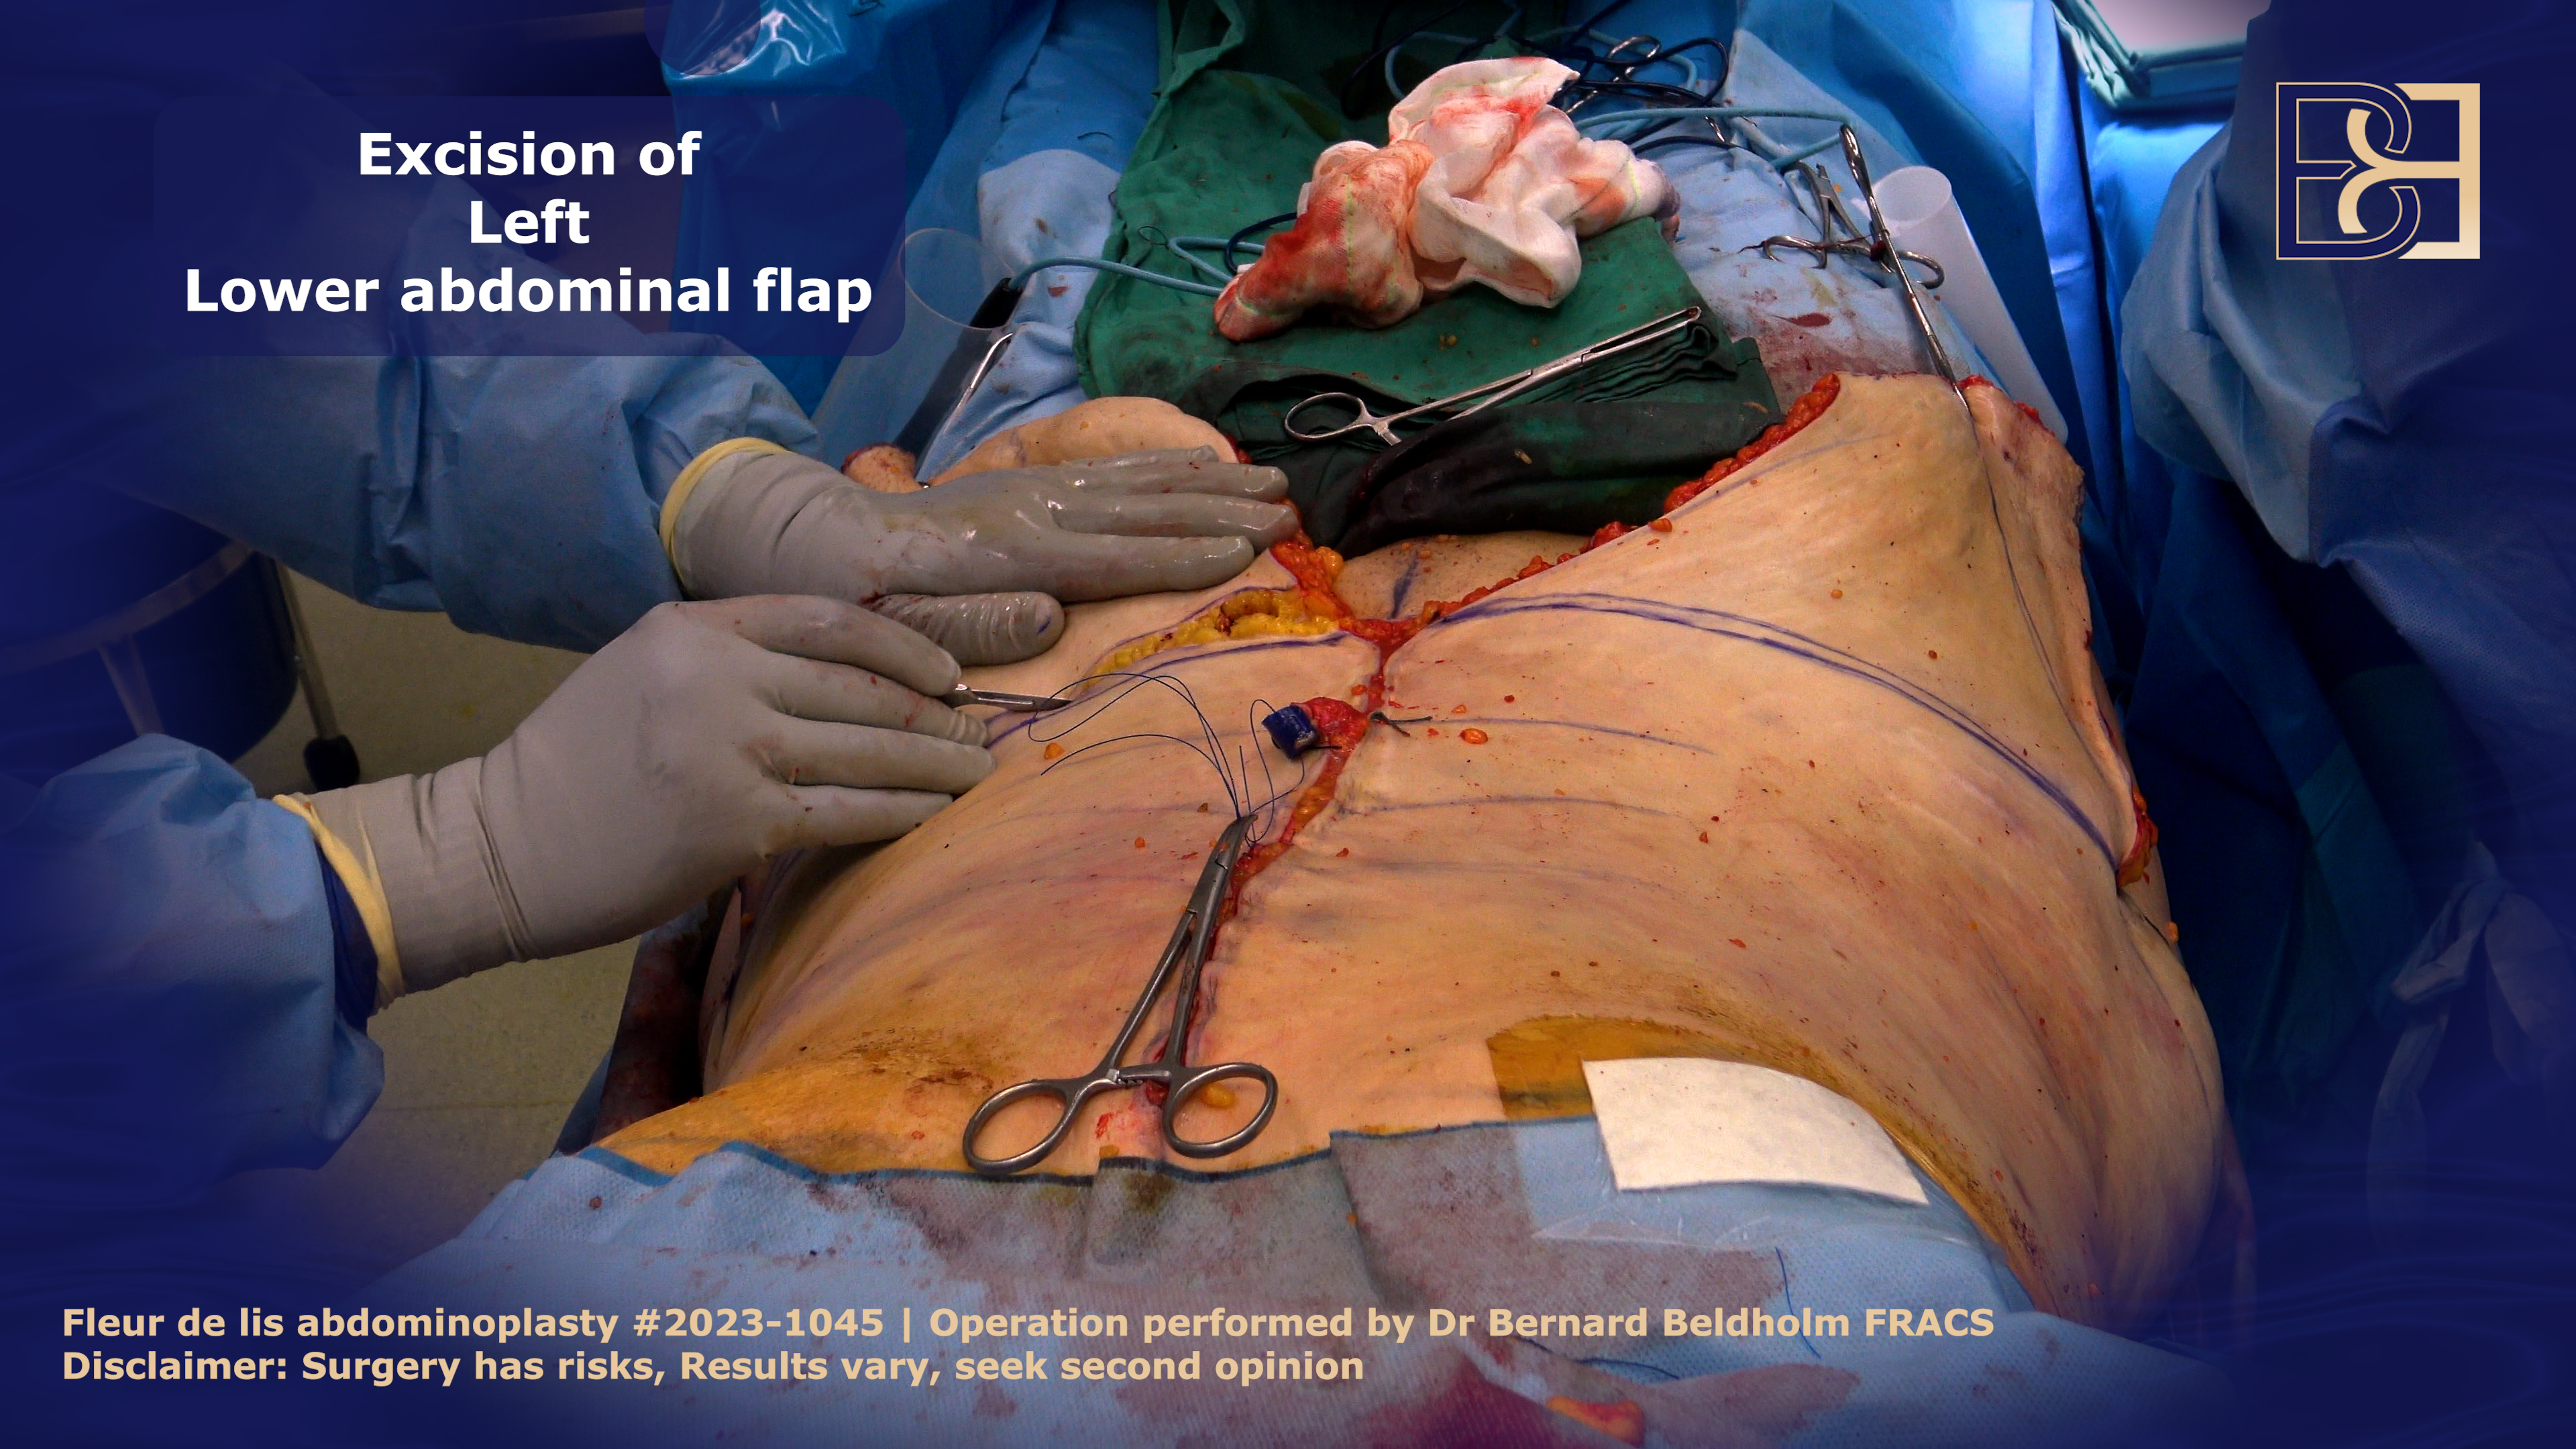 Excision of left lower abdominal flap in Fleur de lis abdominoplasty performed by Dr Beldholm